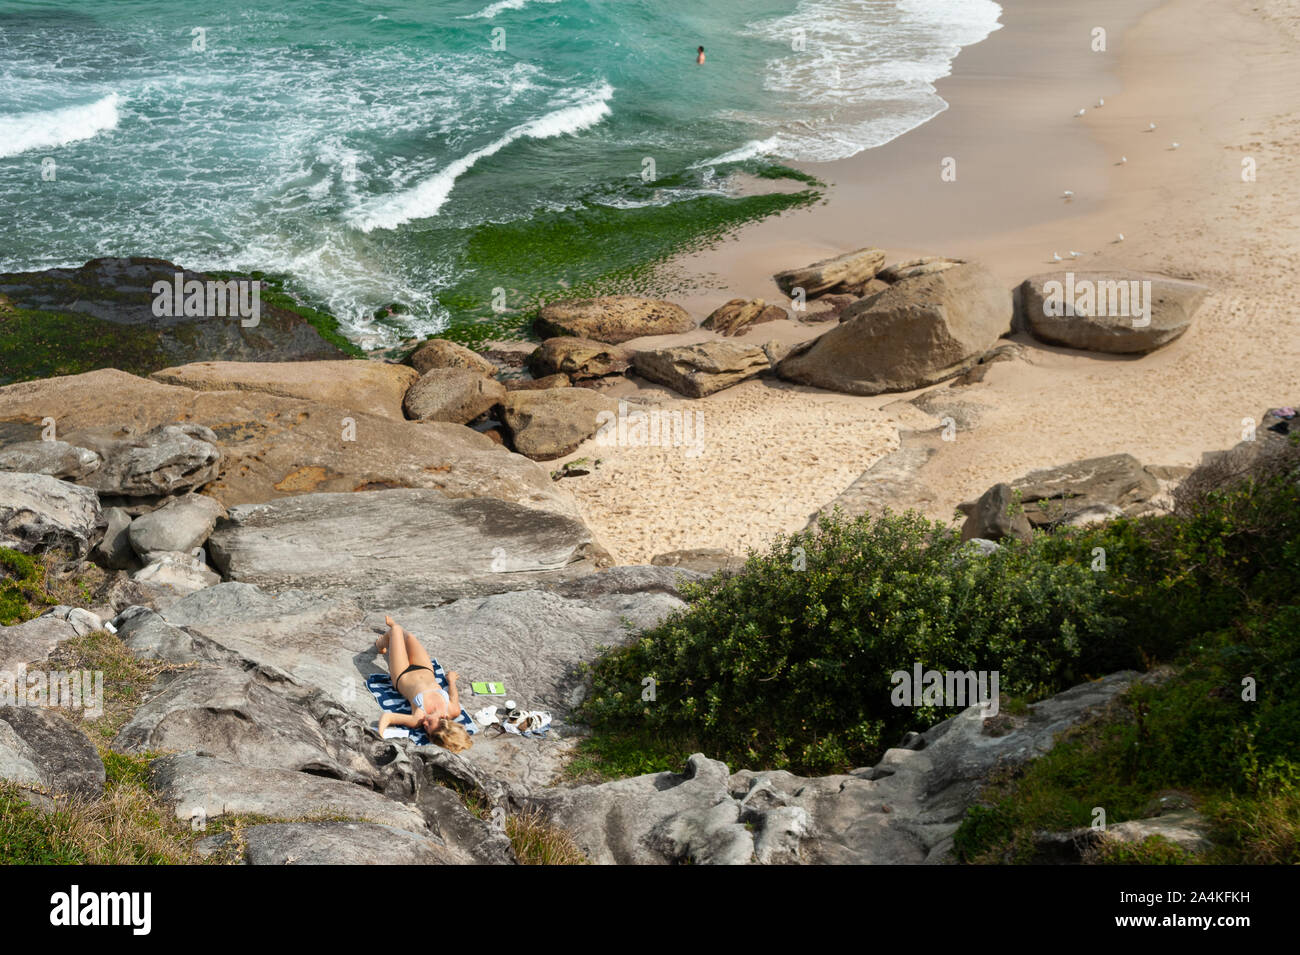 27.09.2019, Sydney, New South Wales, Australia - A woman sunbathes on the rocks at Tamarama Beach. Stock Photo